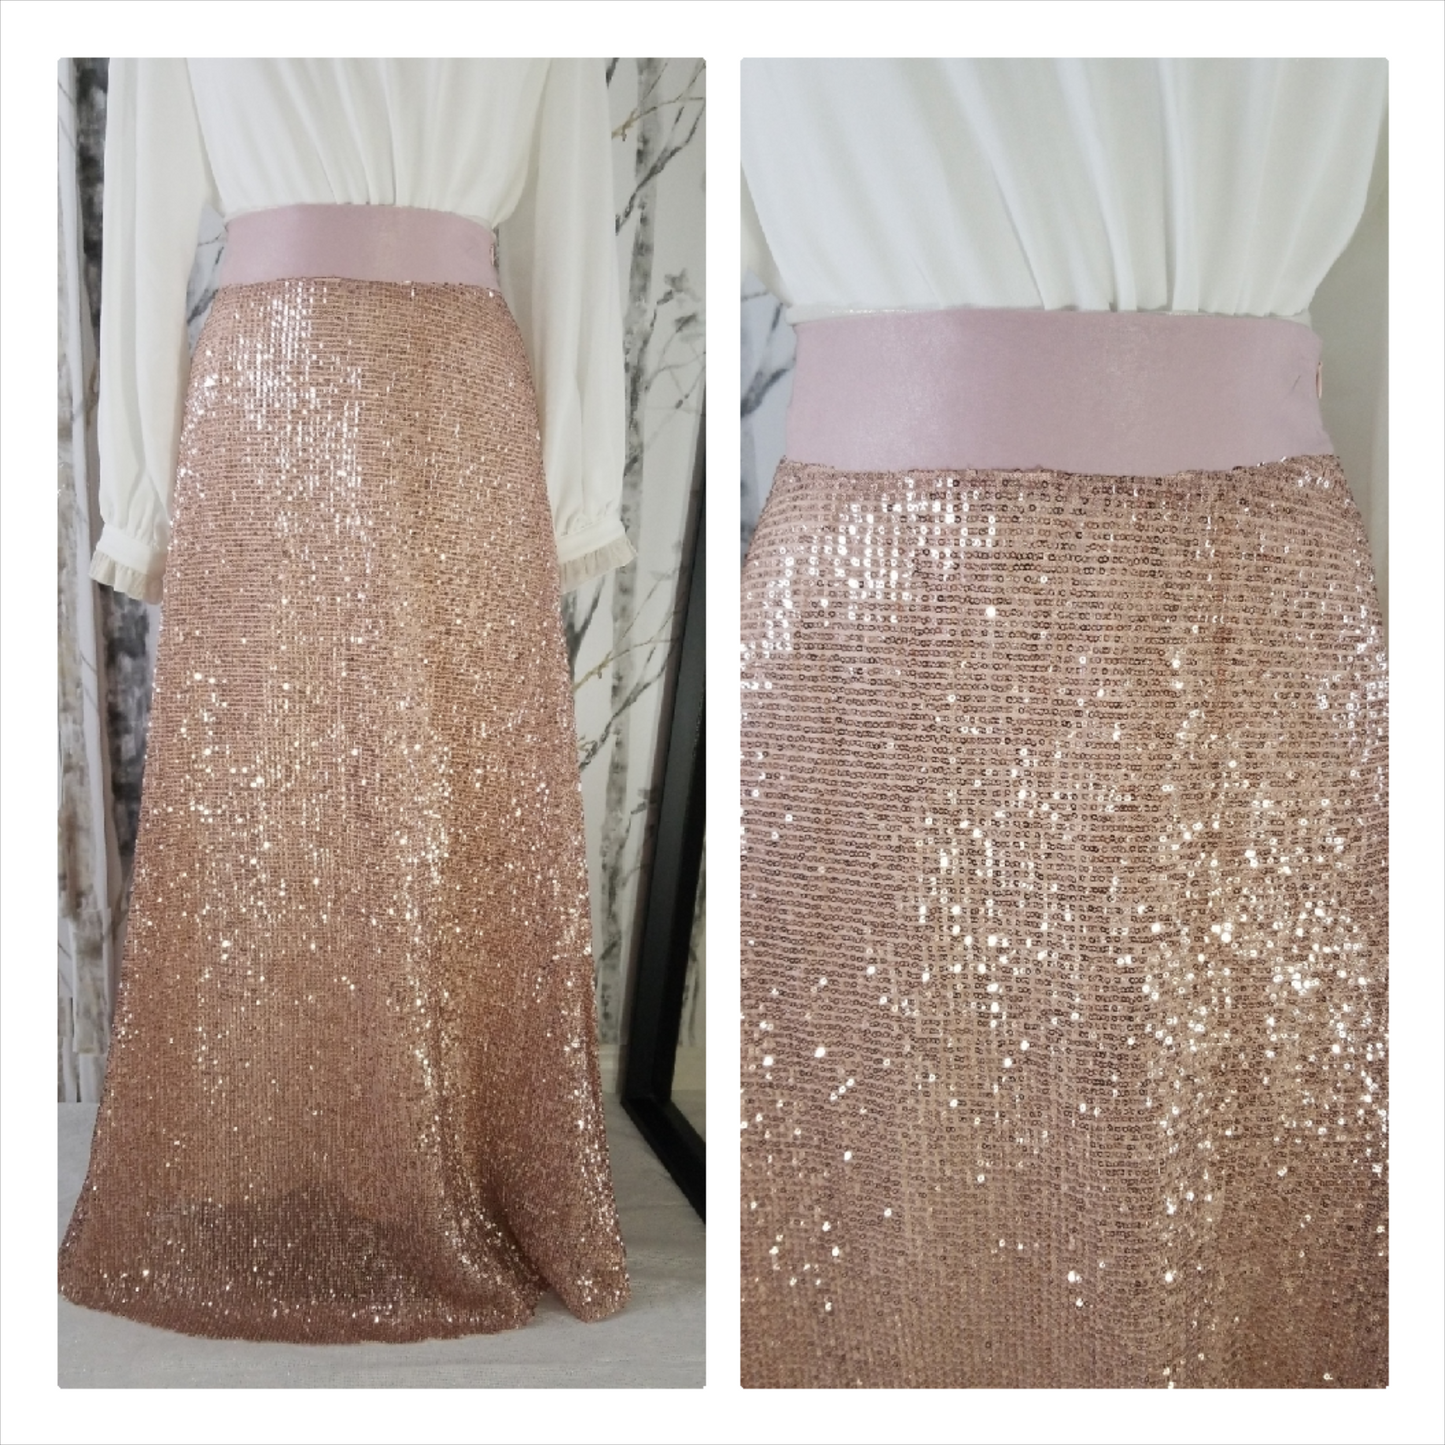 Long sequin skirt